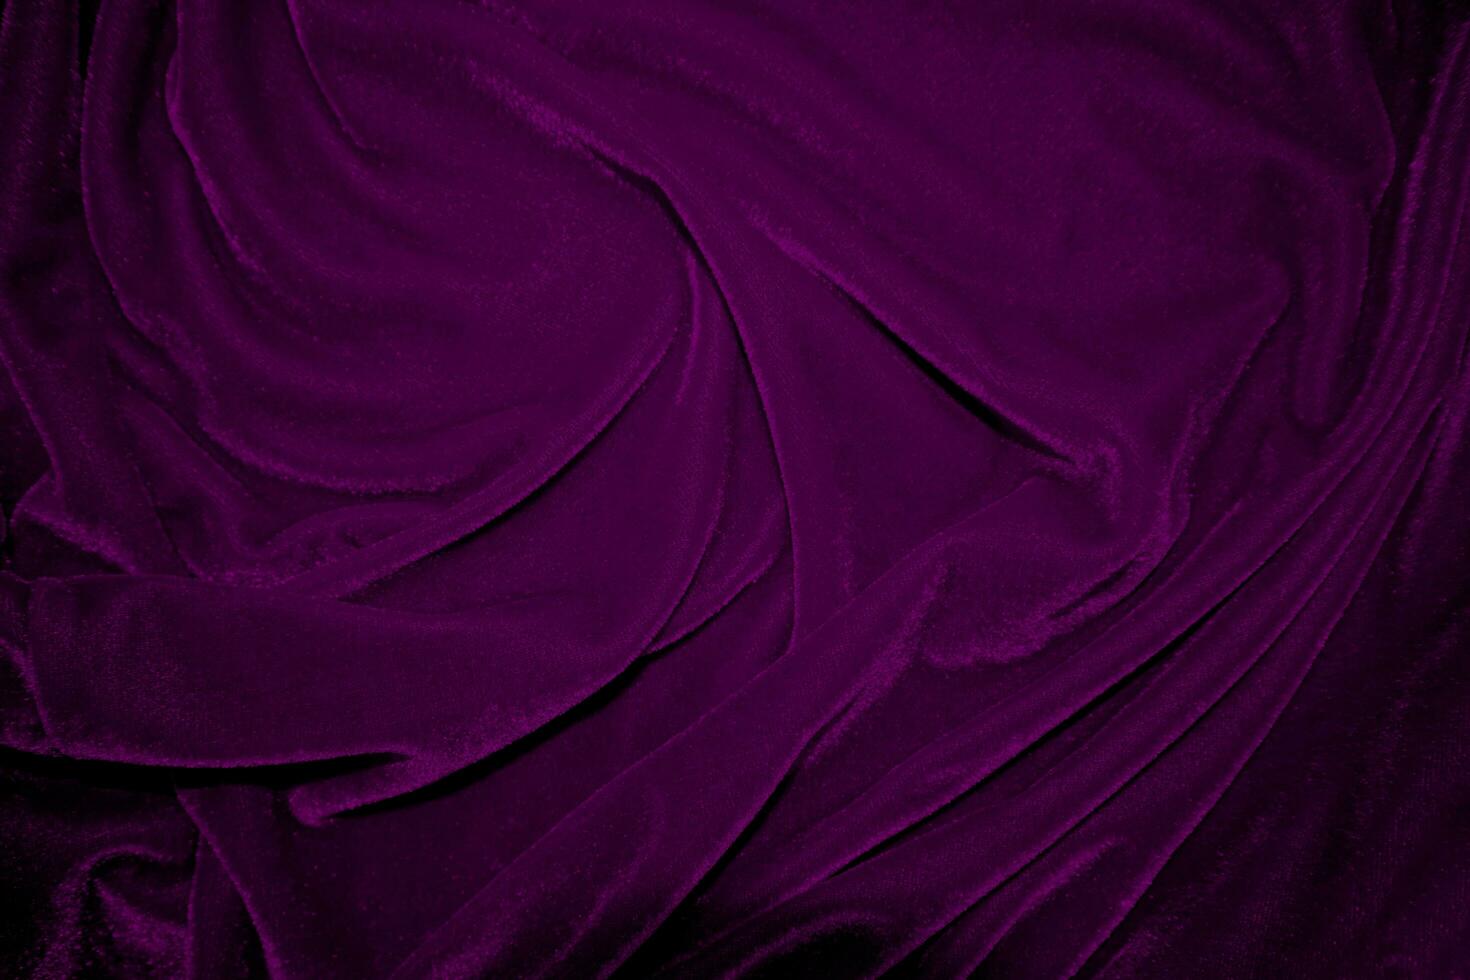 rosado terciopelo tela textura usado como antecedentes. vino color pana tela antecedentes de suave y suave textil material. aplastada terciopelo .lujo magenta tono para seda. foto